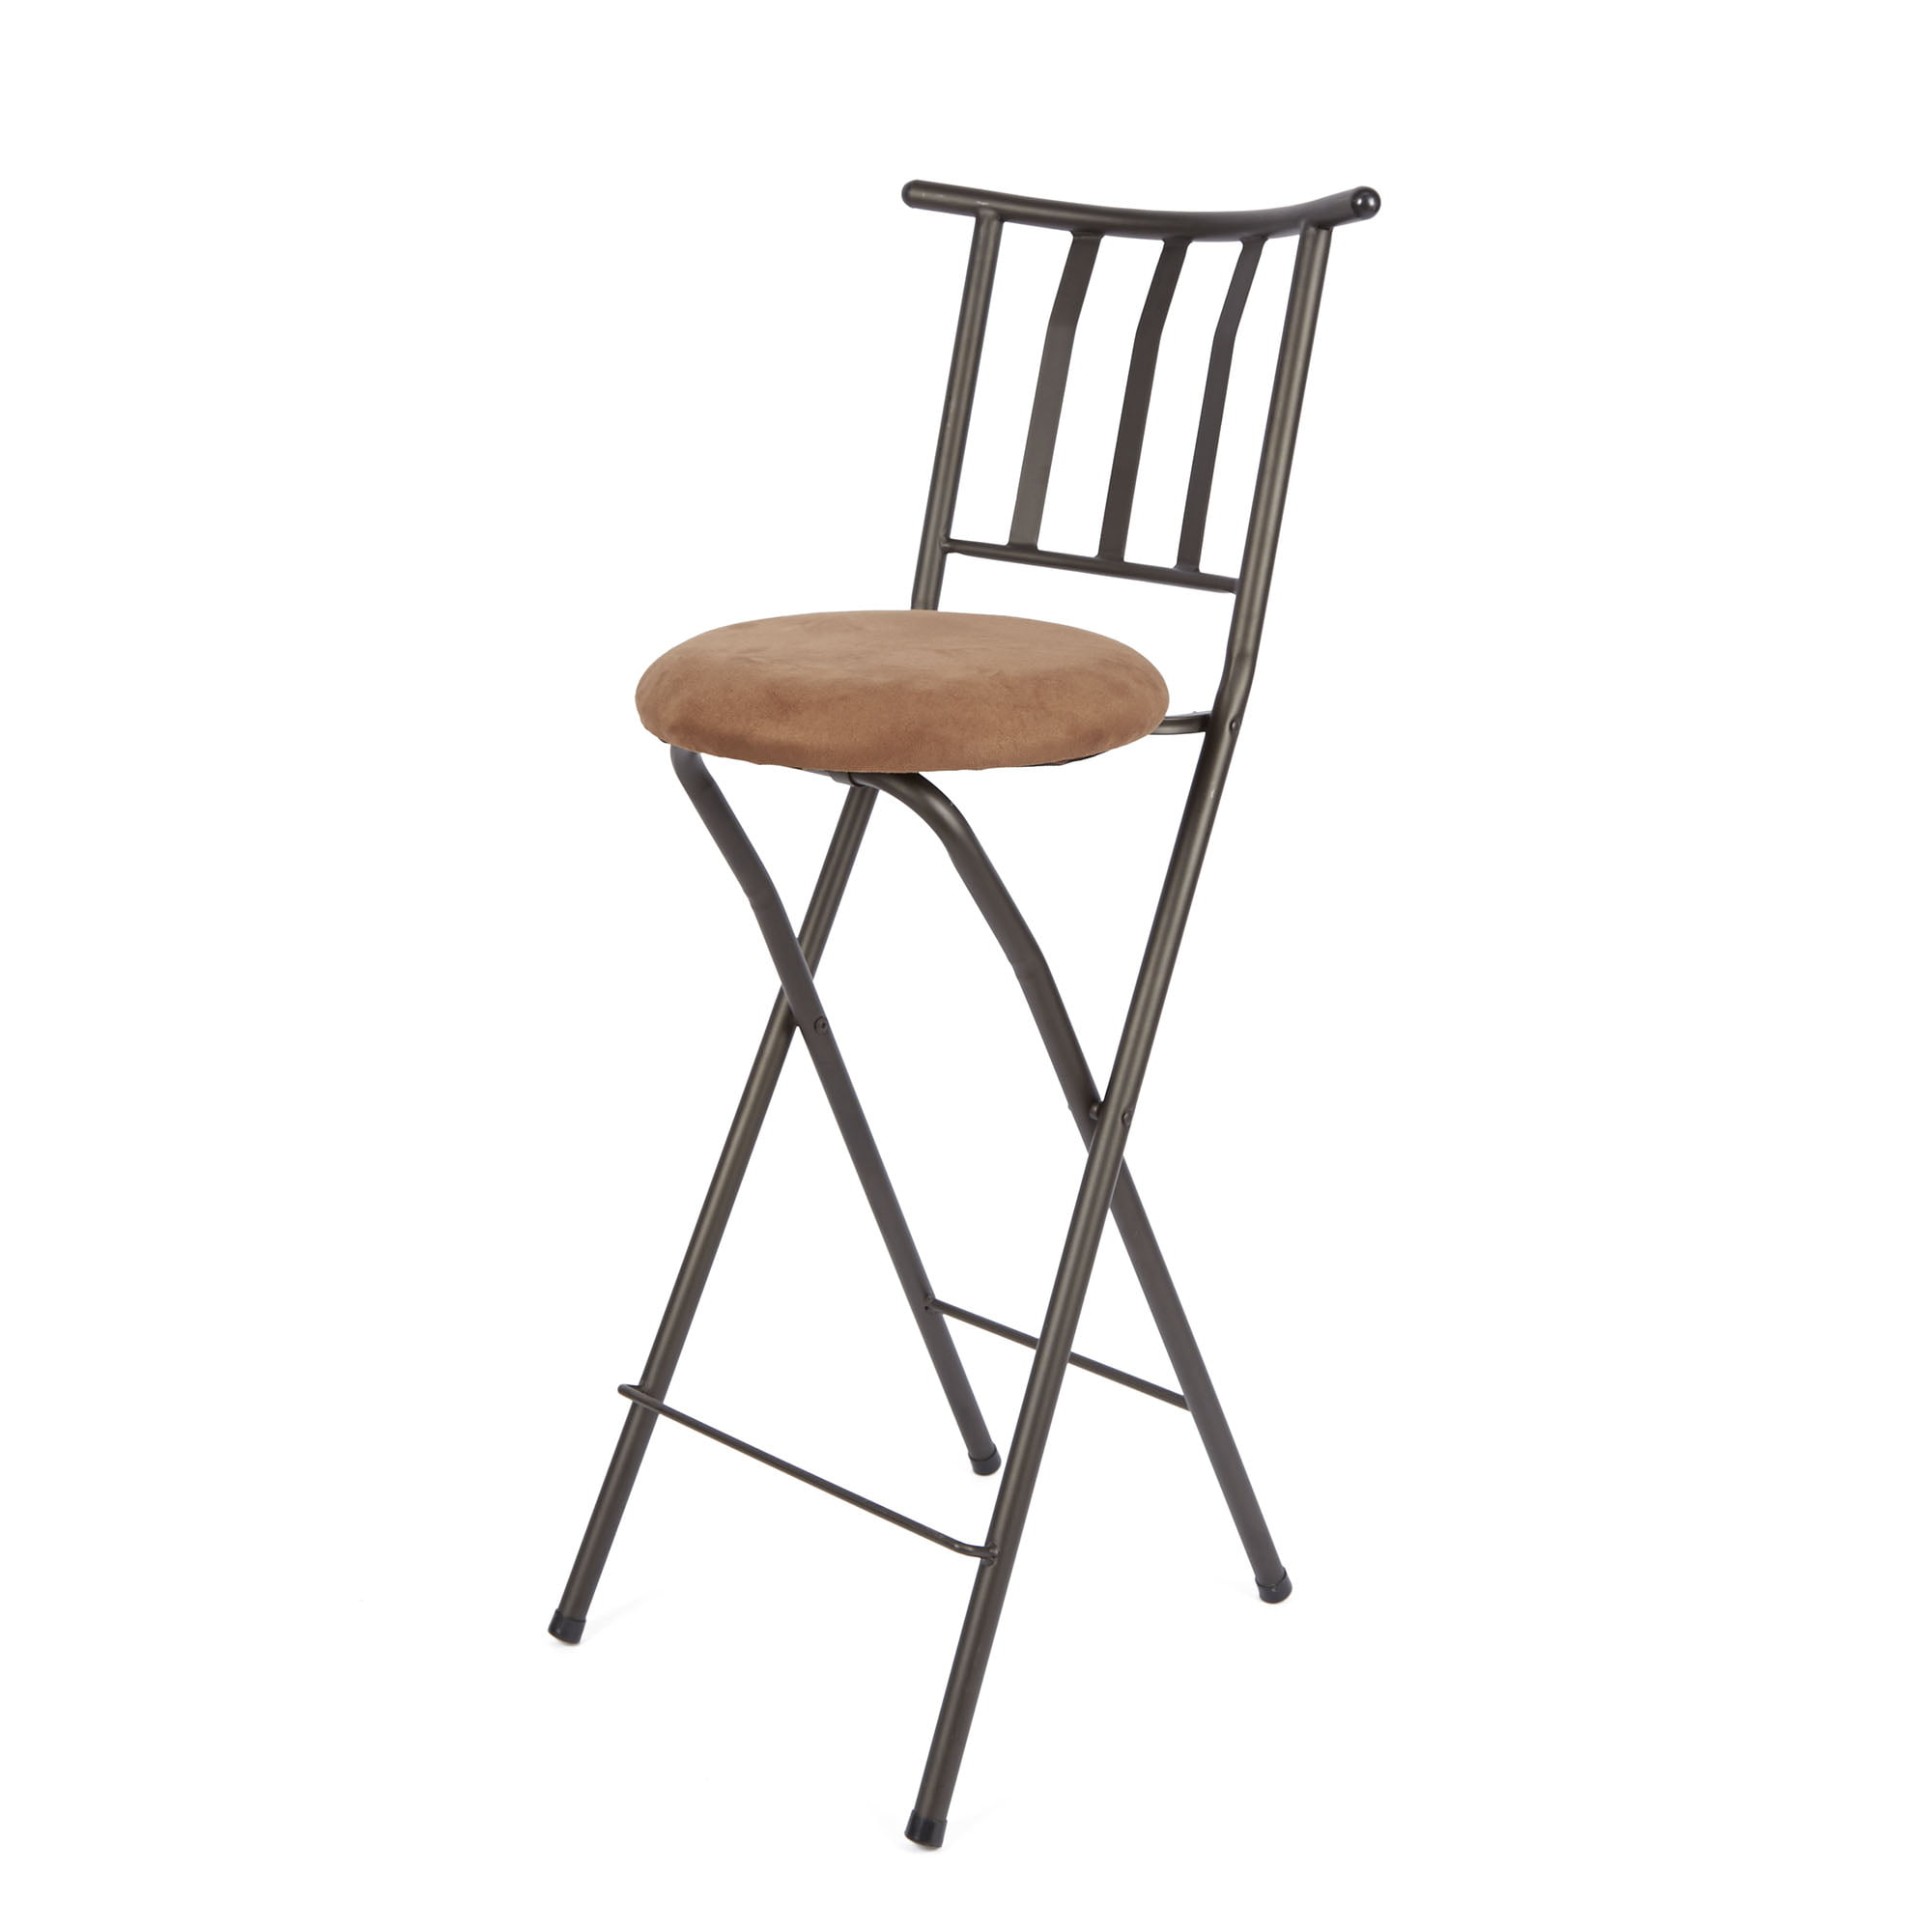 folding bar stools